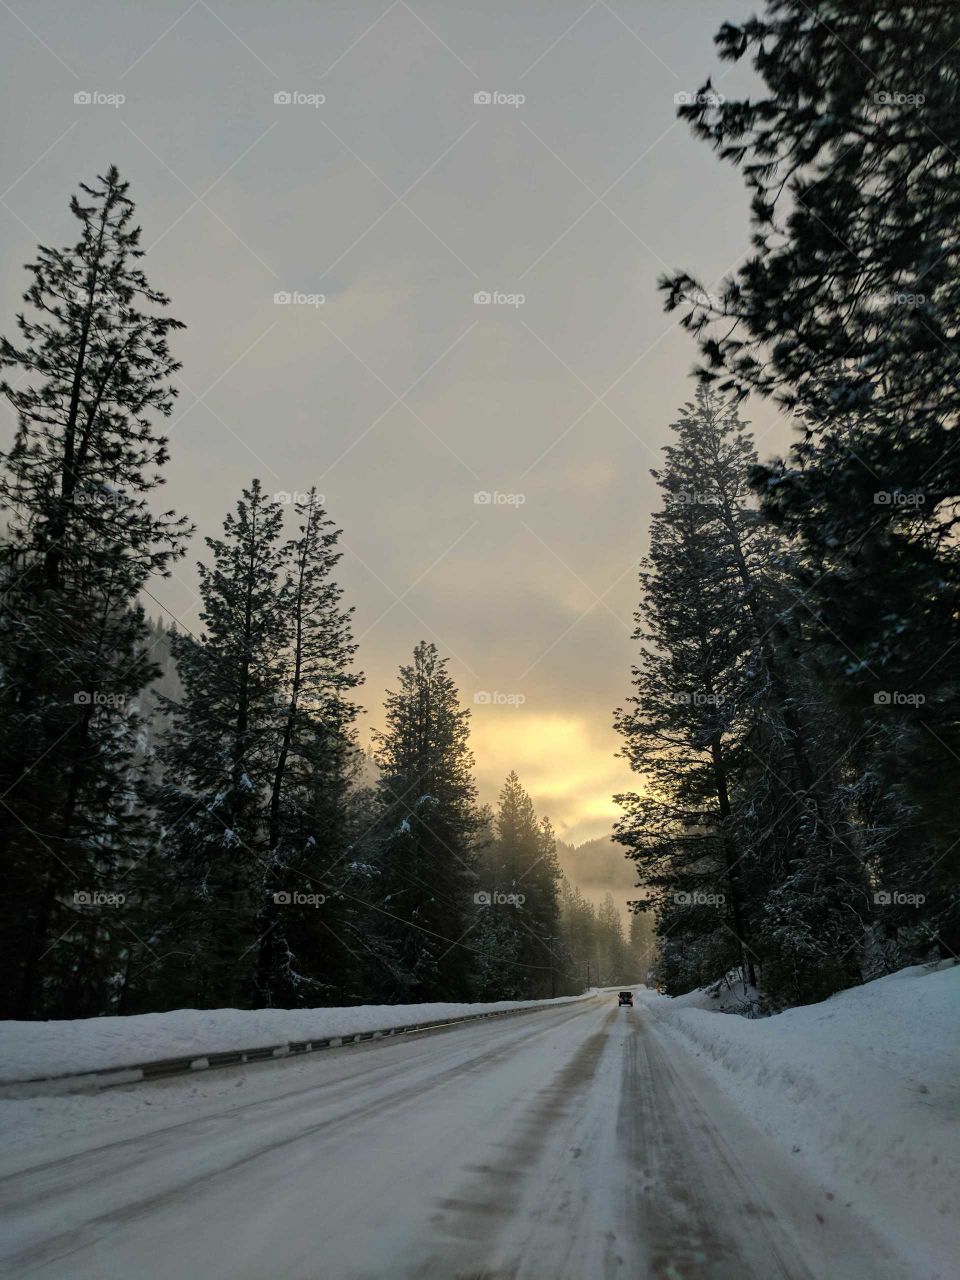 Idaho snowy road with sunset